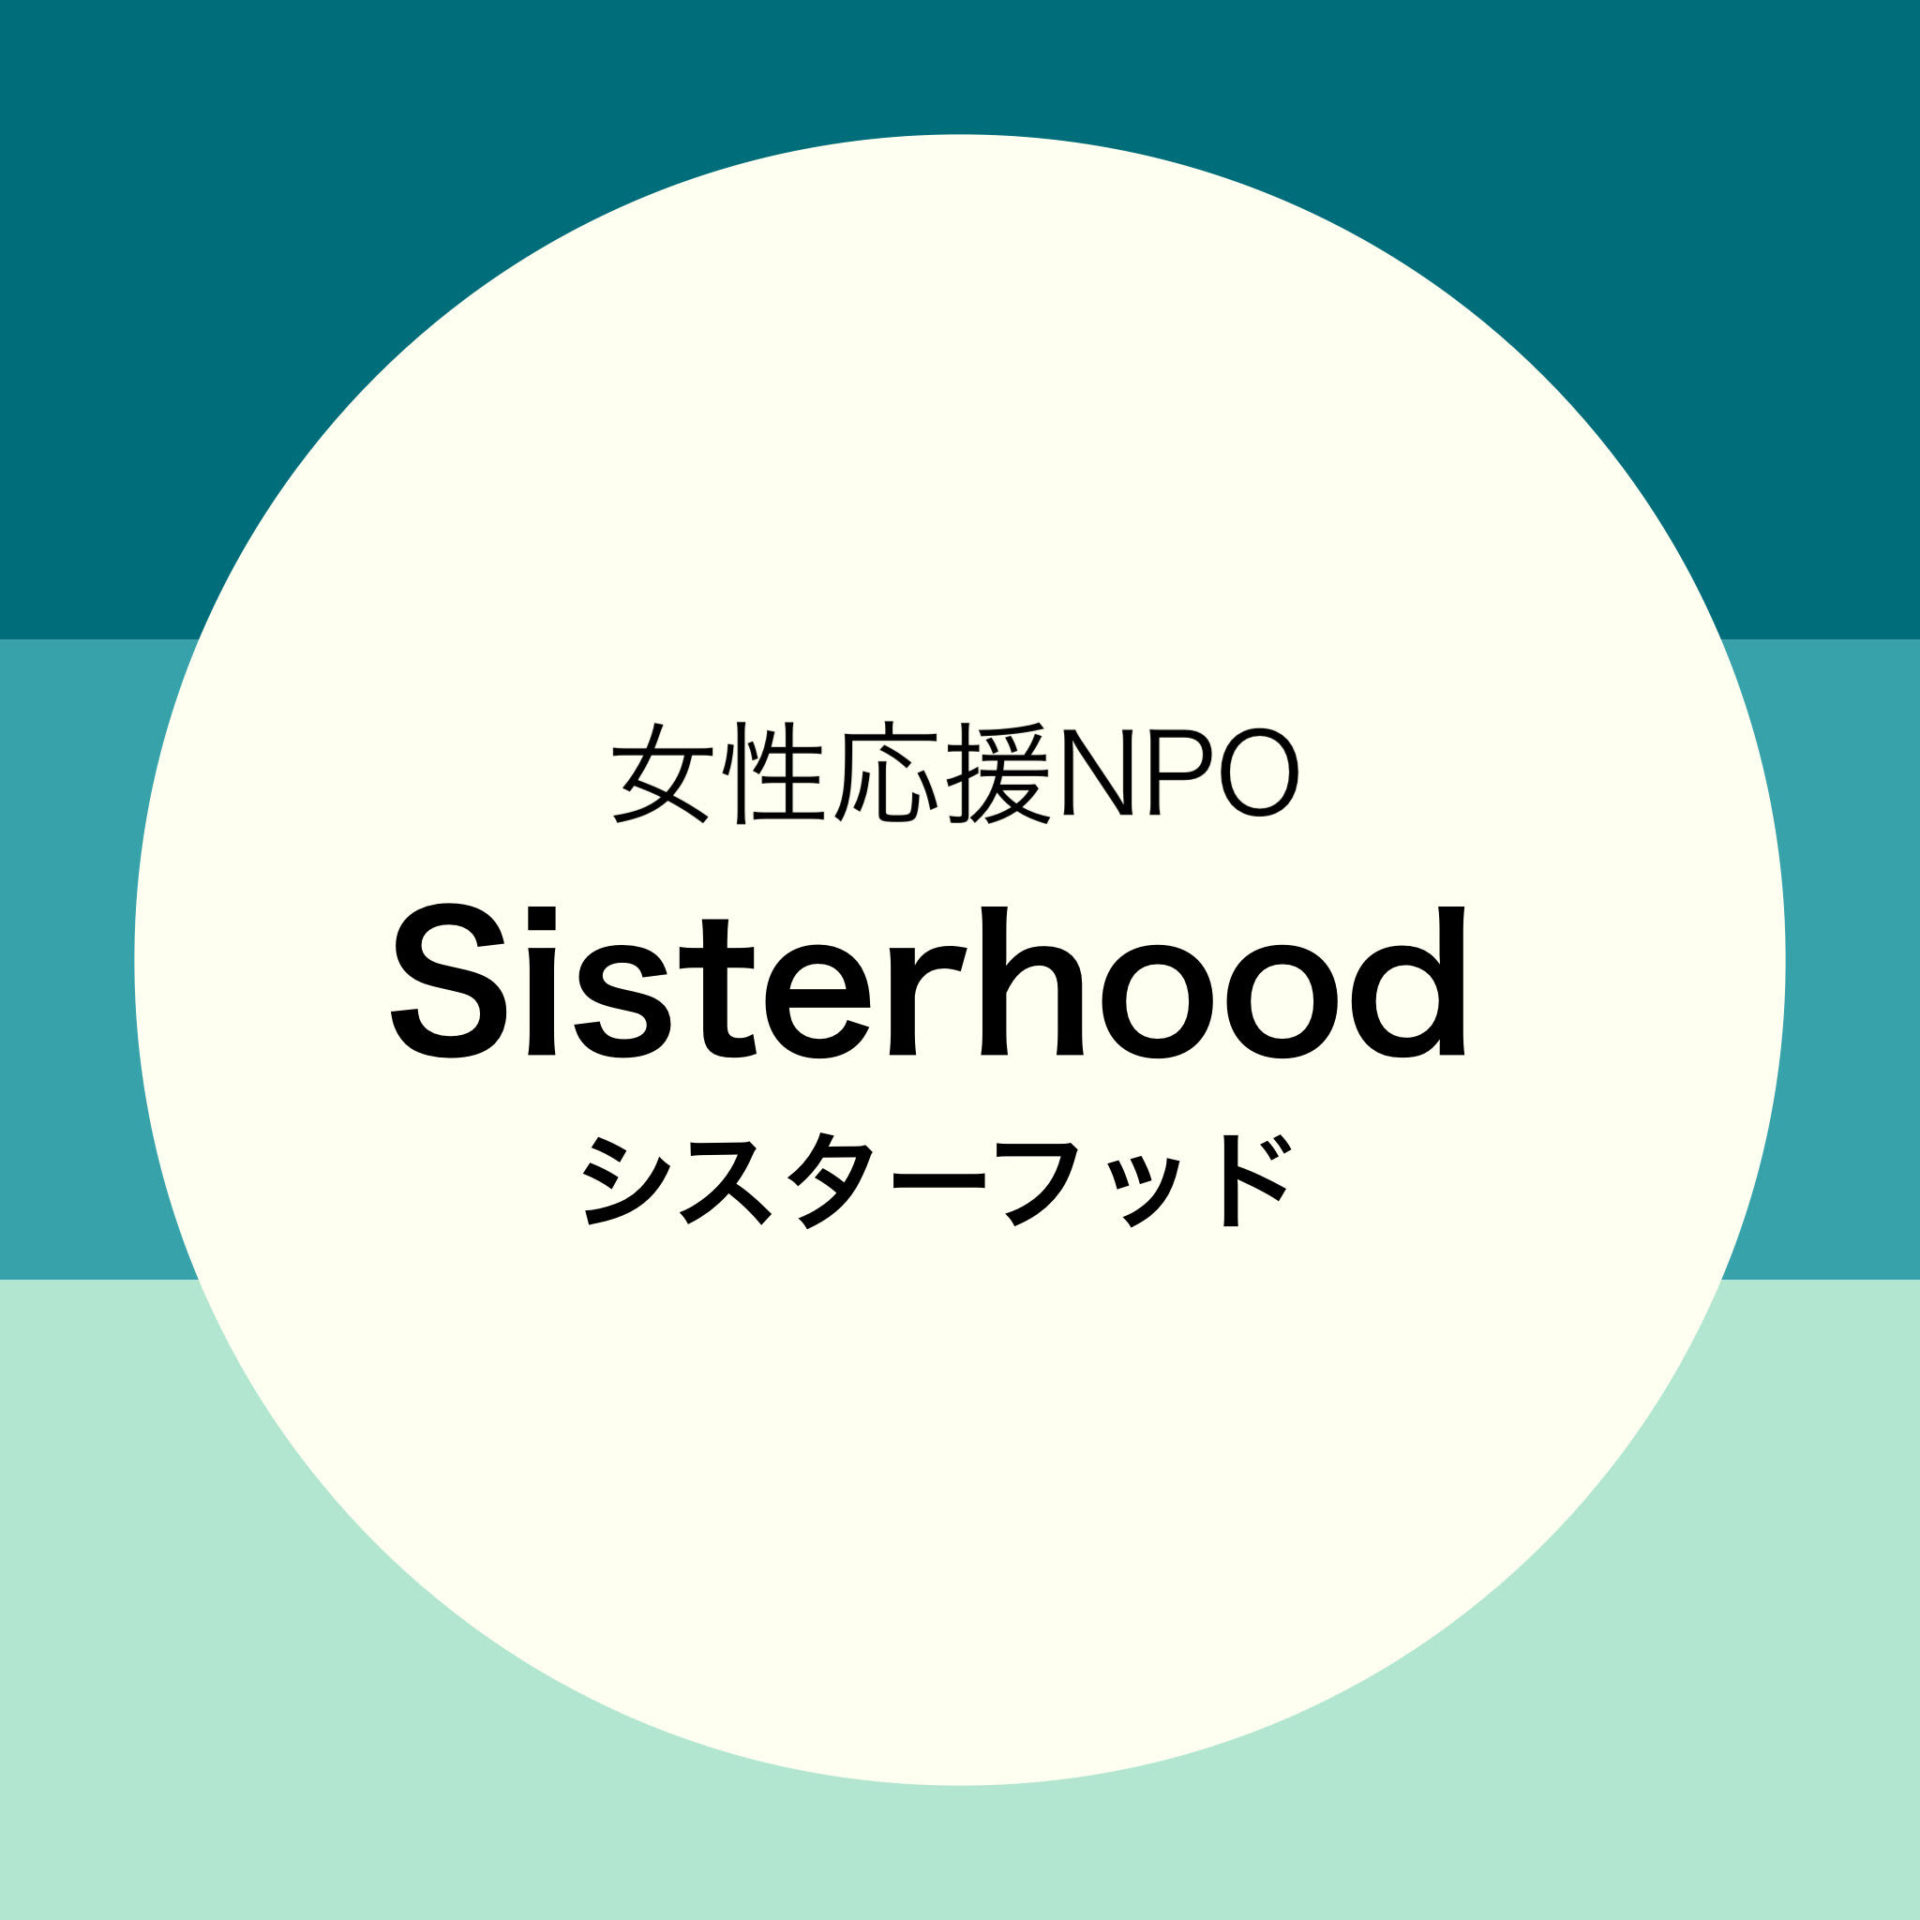 sisterhood ロゴ